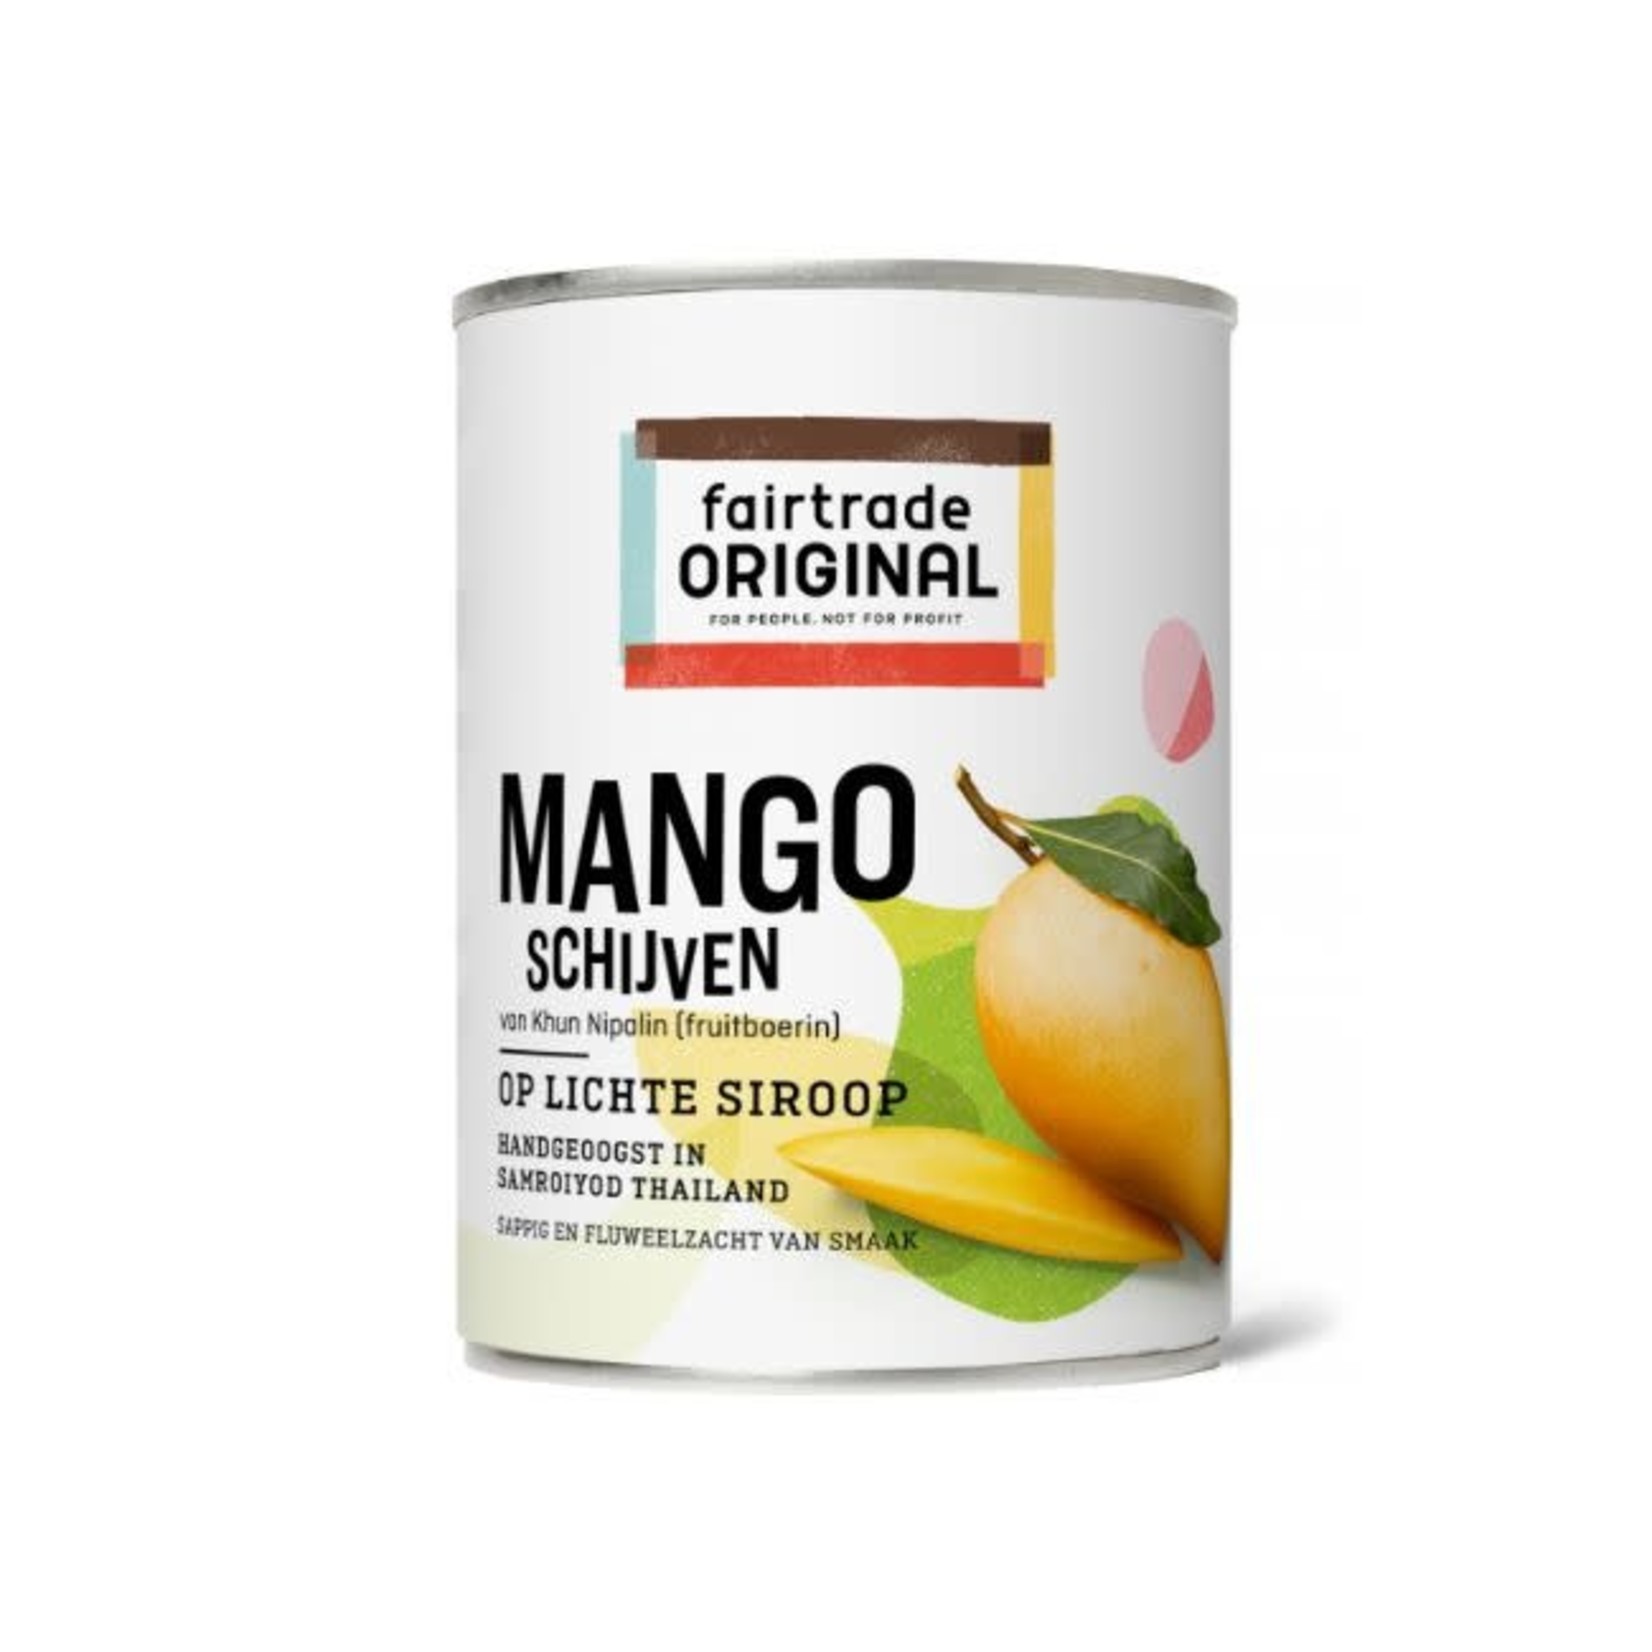 Fairtrade Original Mango schijven op sap